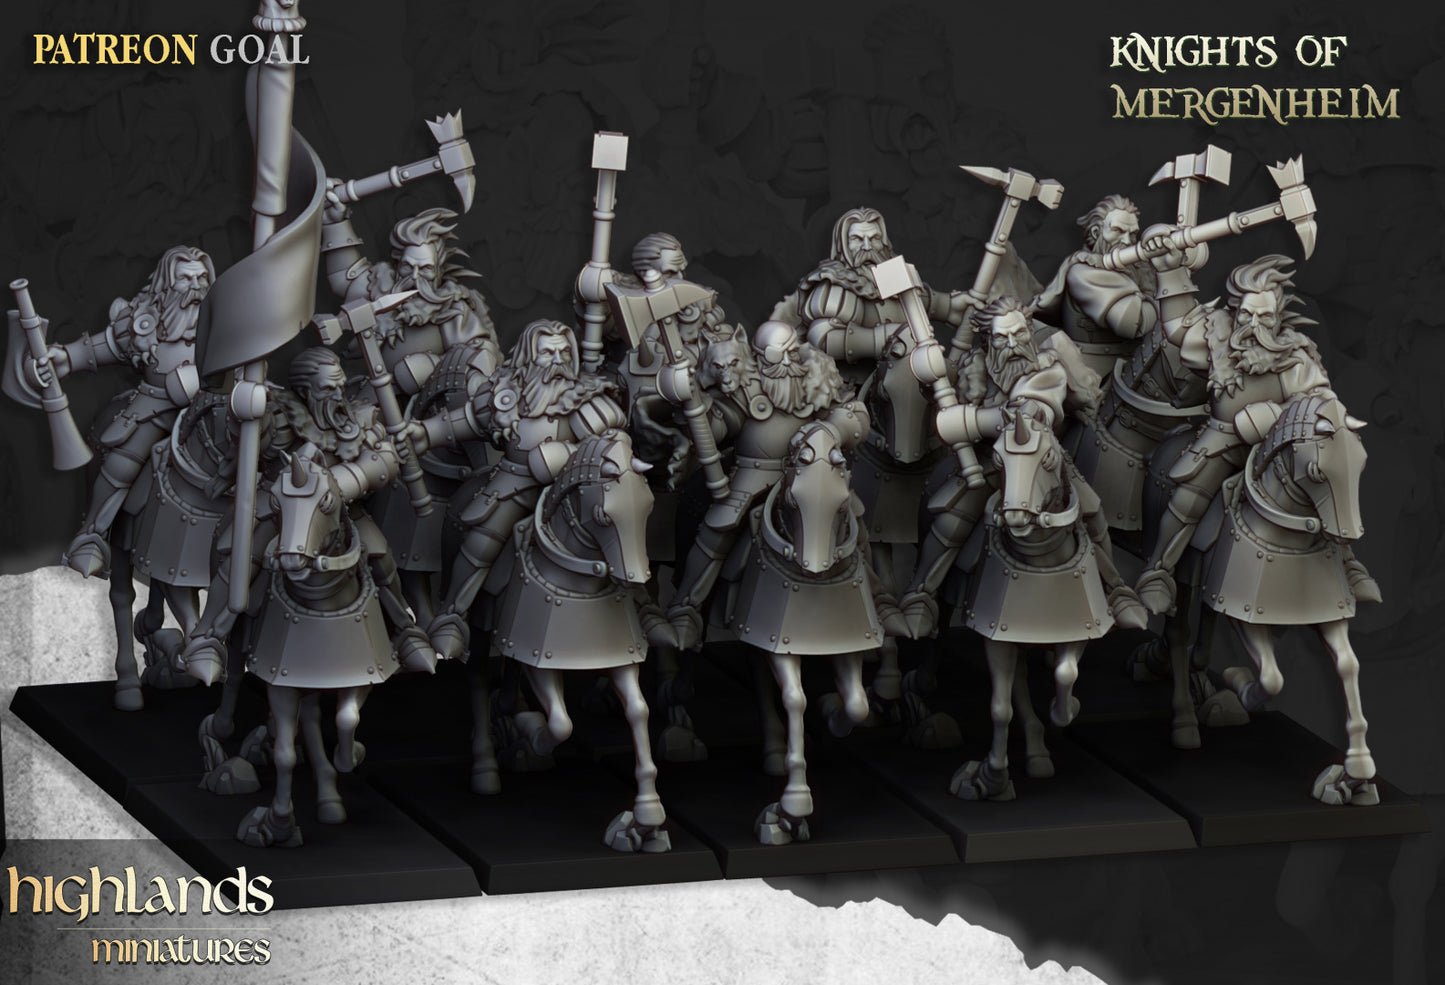 Knights of Mergenheim by Highlands Miniatures